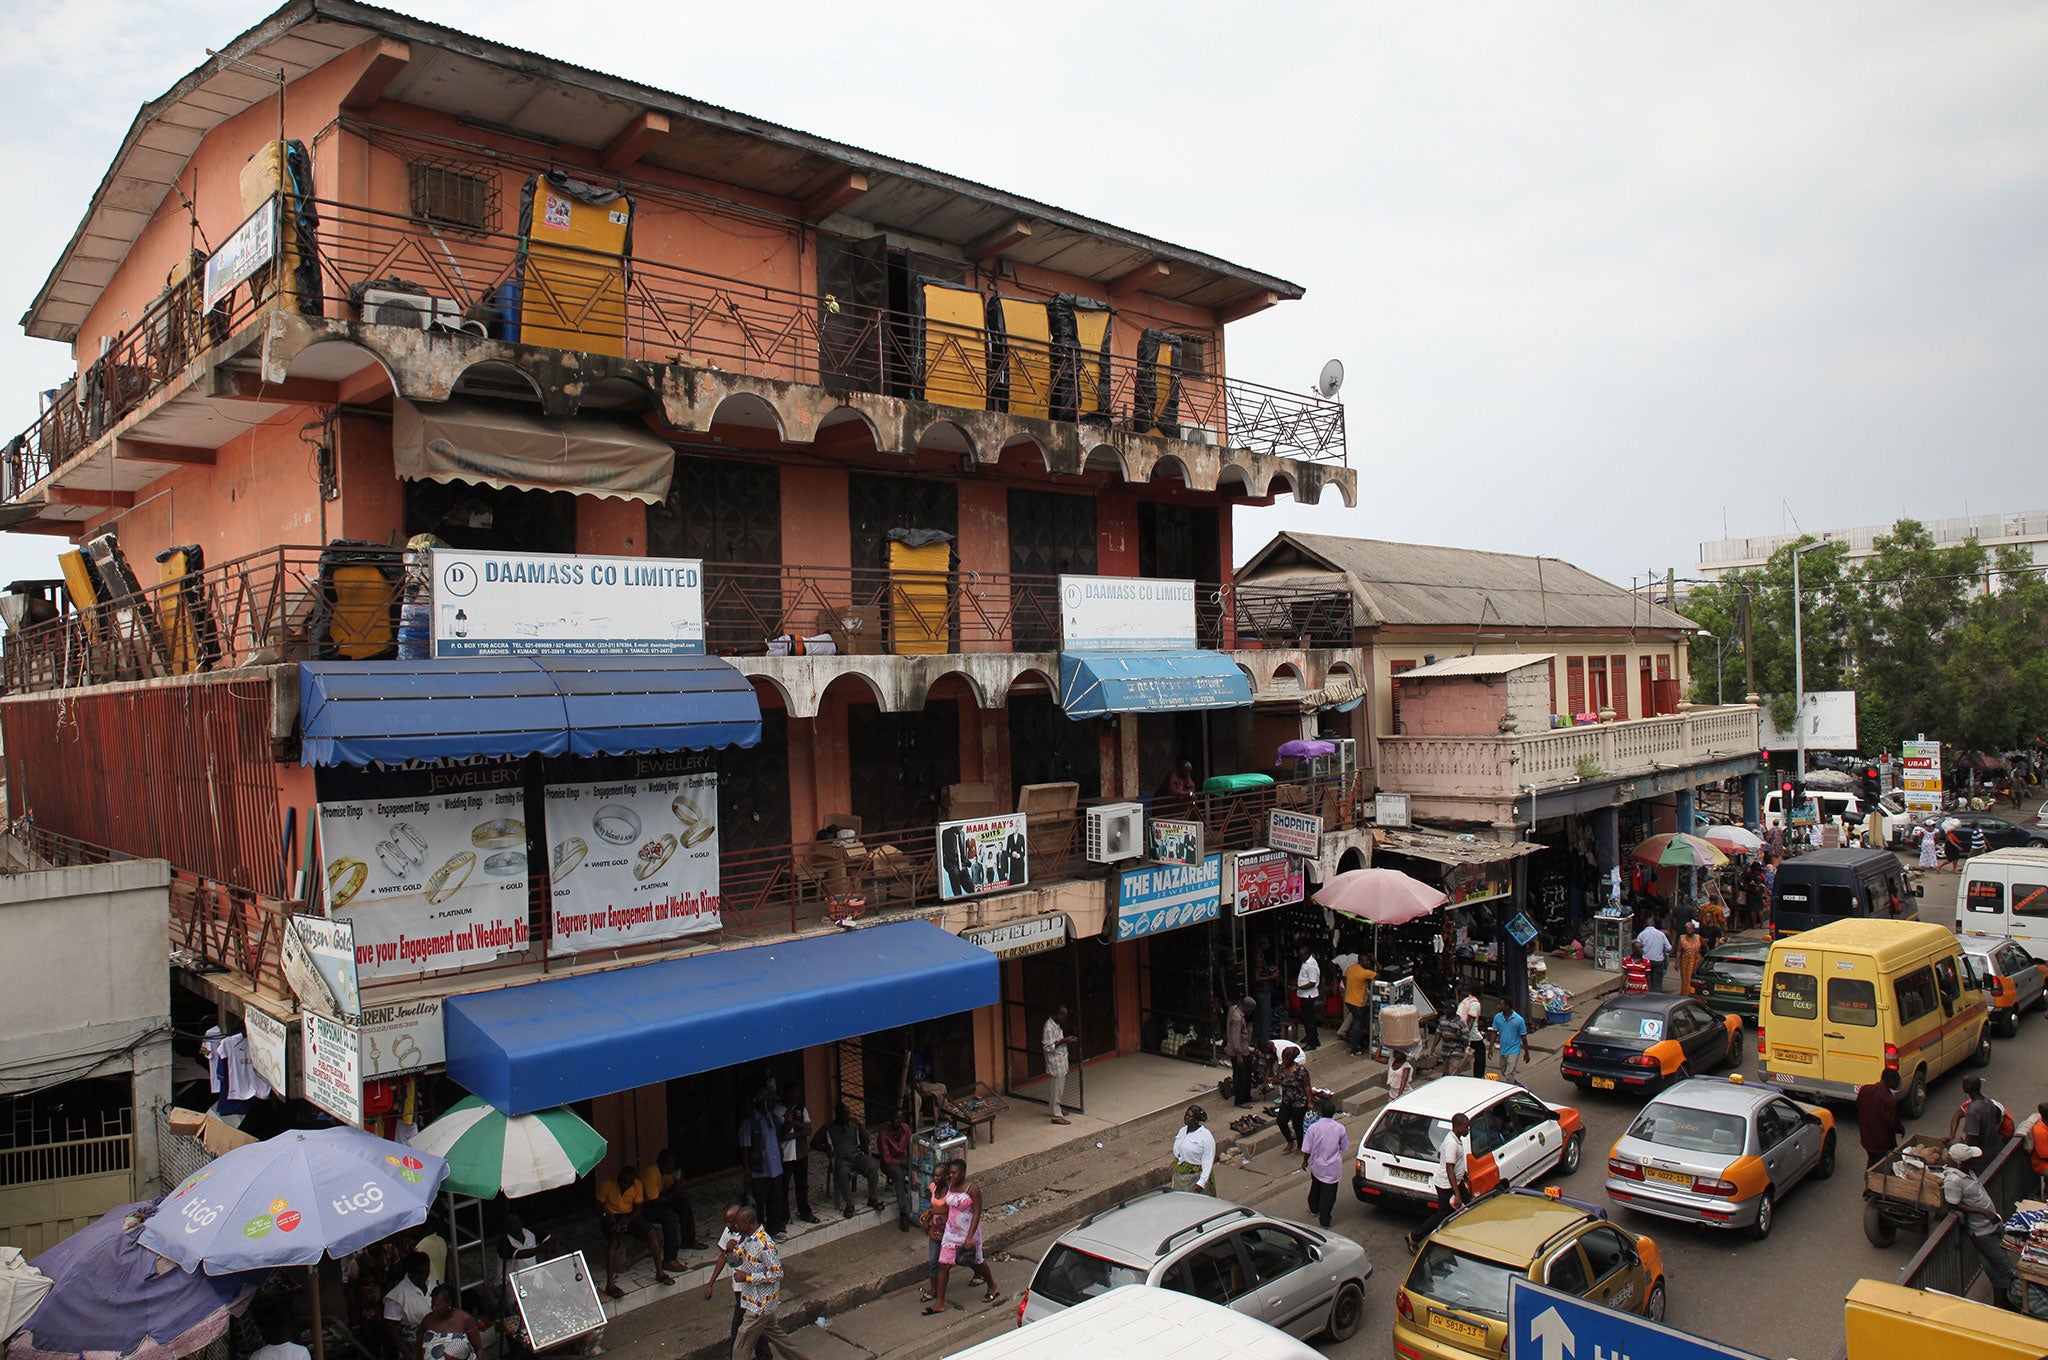 A street in Ghana's capital of Accra